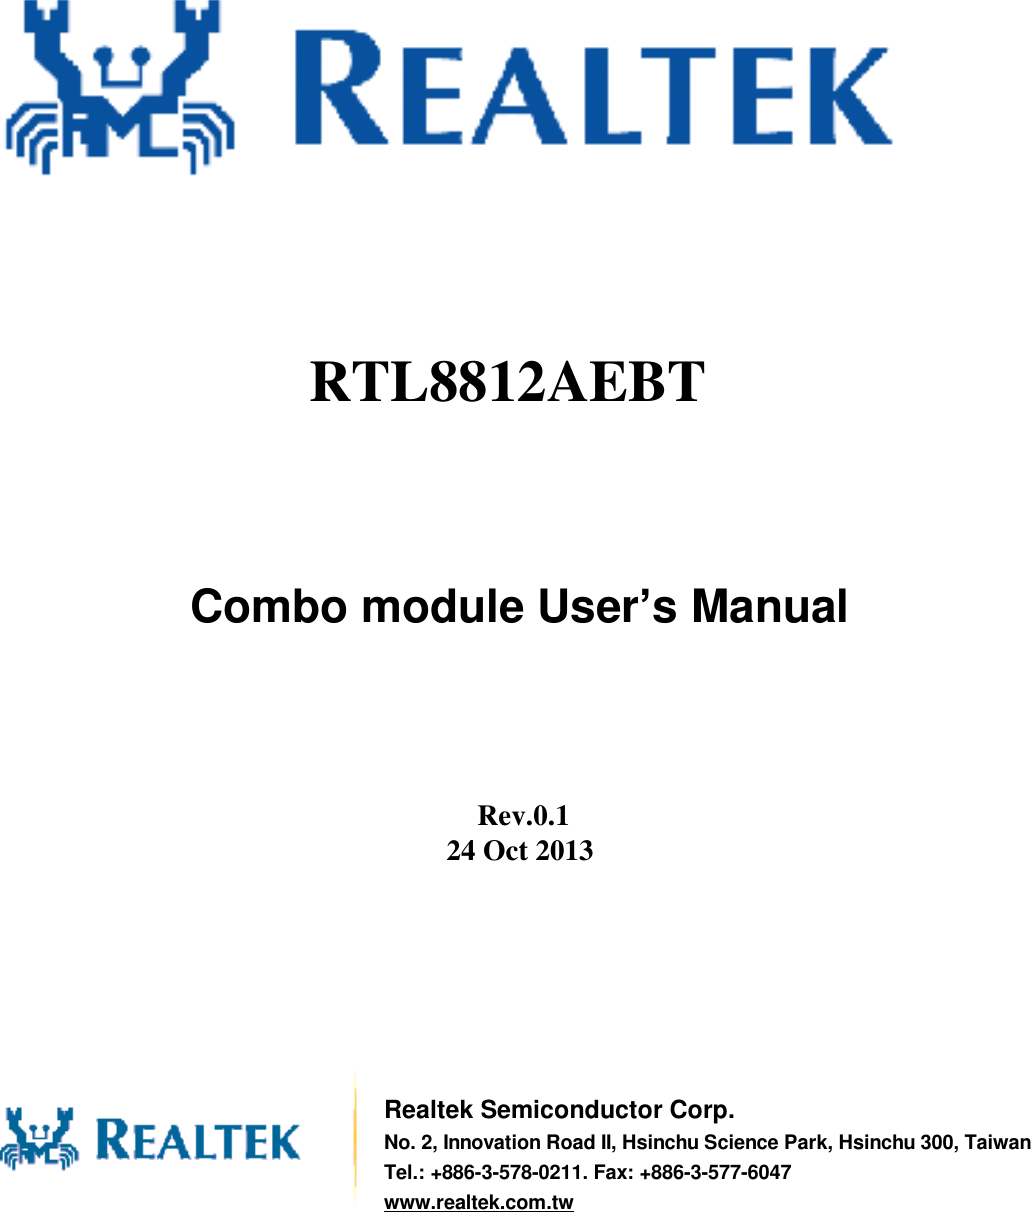                Combo module User’s Manual         Rev.0.1 24 Oct 2013          Realtek Semiconductor Corp. No. 2, Innovation Road II, Hsinchu Science Park, Hsinchu 300, Taiwan Tel.: +886-3-578-0211. Fax: +886-3-577-6047 www.realtek.com.tw RTL8812AEBT  